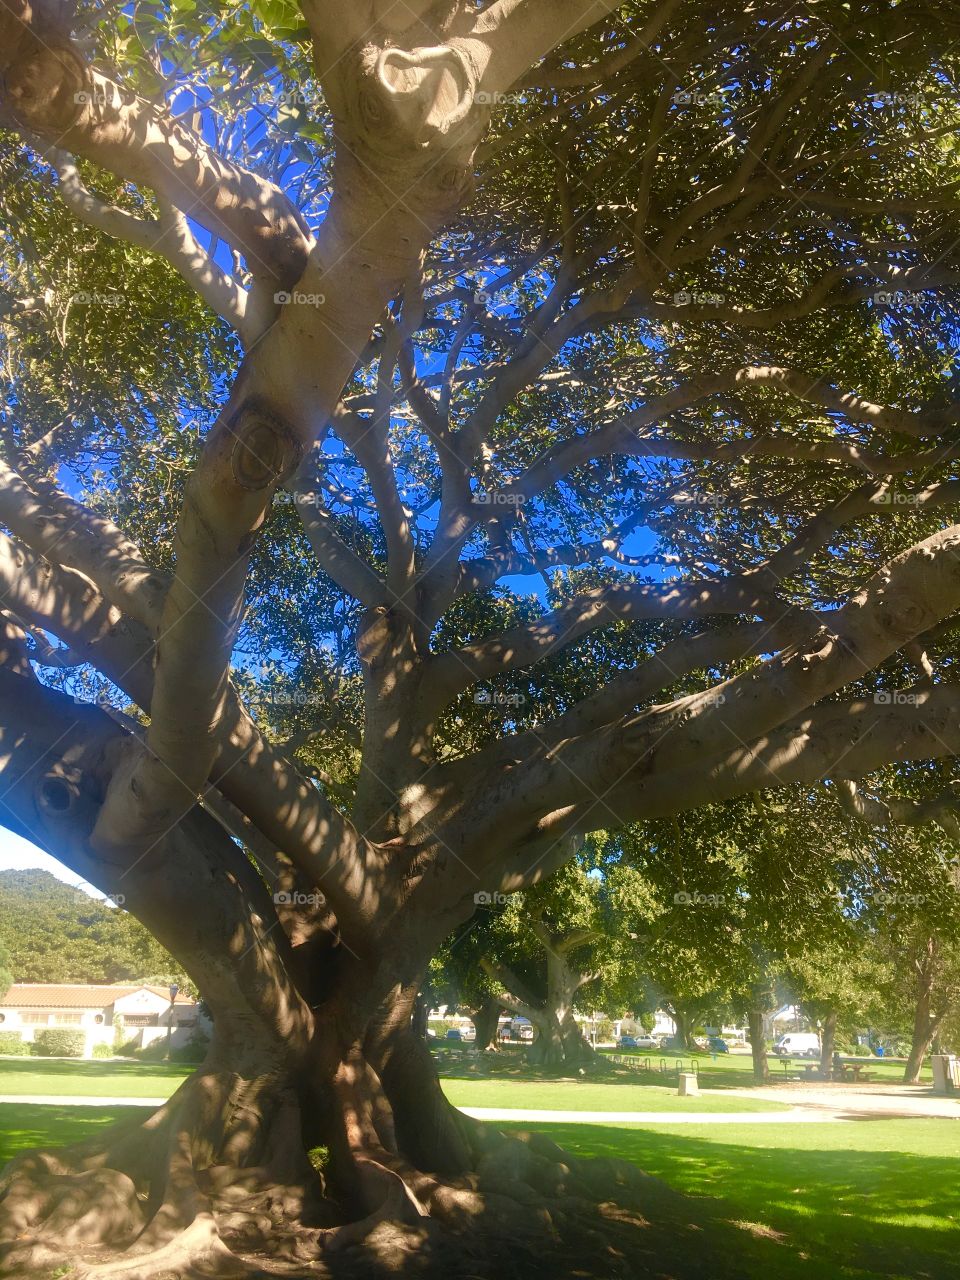 Beneath a beautiful Banyan tree.